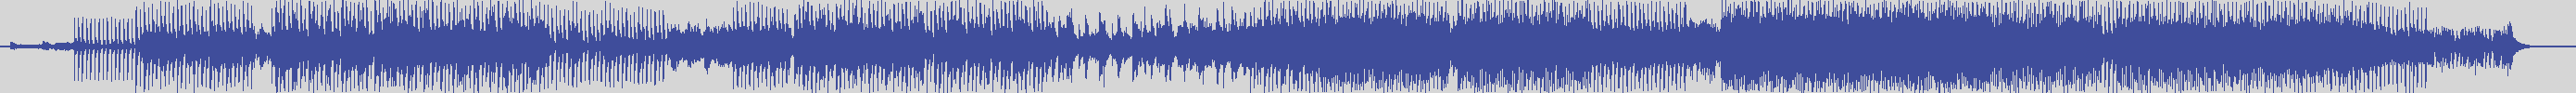 upr [UPR019] Adan, Ilse - Skin [Melanoboy Rmx] audio wave form